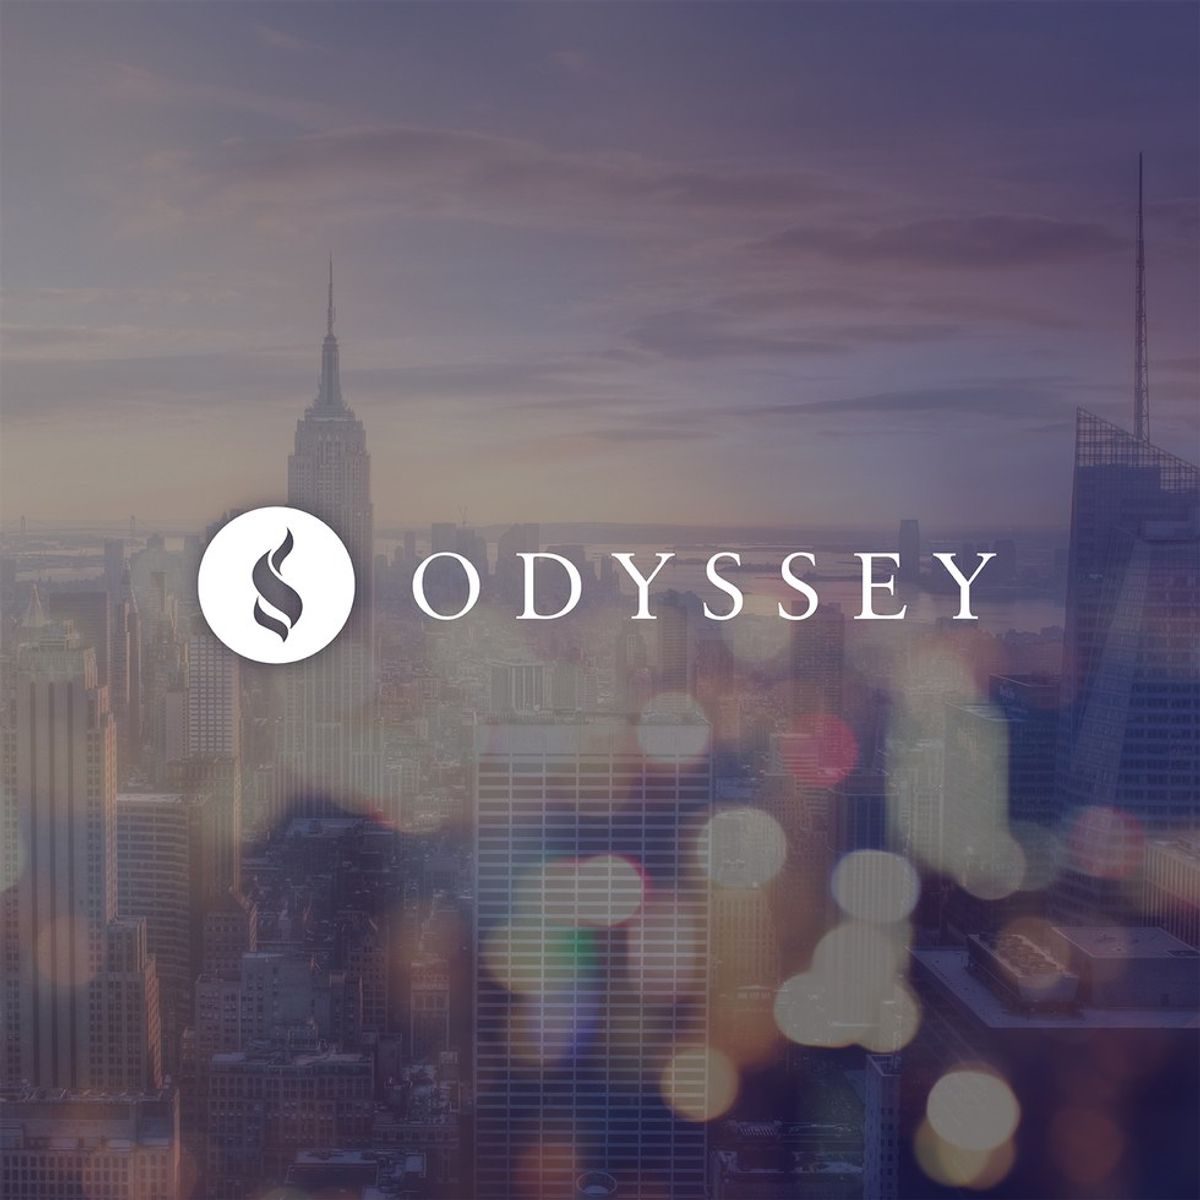 Why Odyssey?